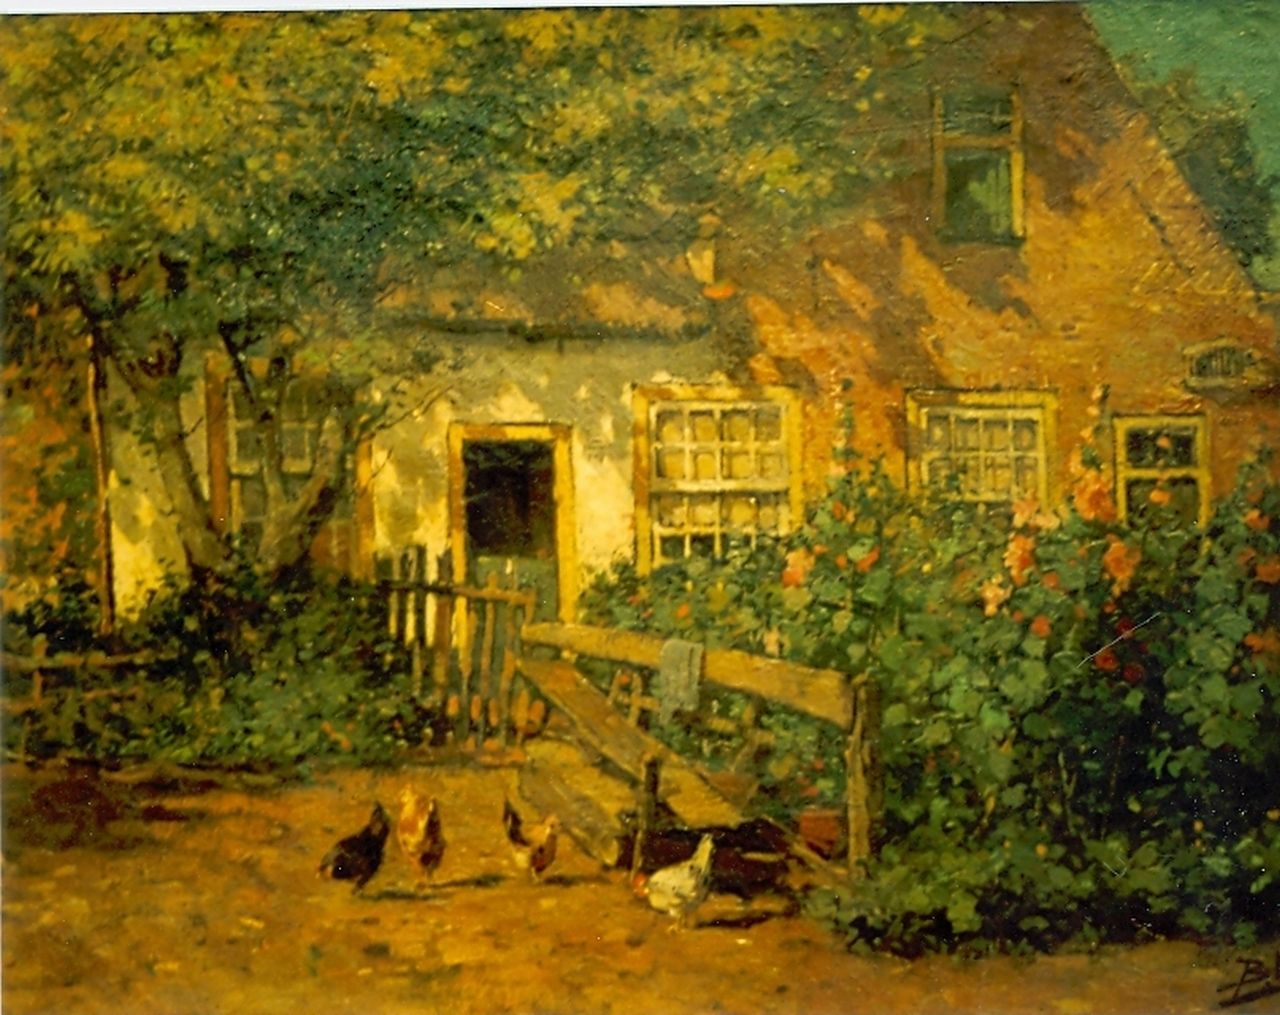 Ven P.J. van der | 'Paul' Jan van der Ven, Chickens on a yard, oil on canvas 35.5 x 55.7 cm, signed l.l.